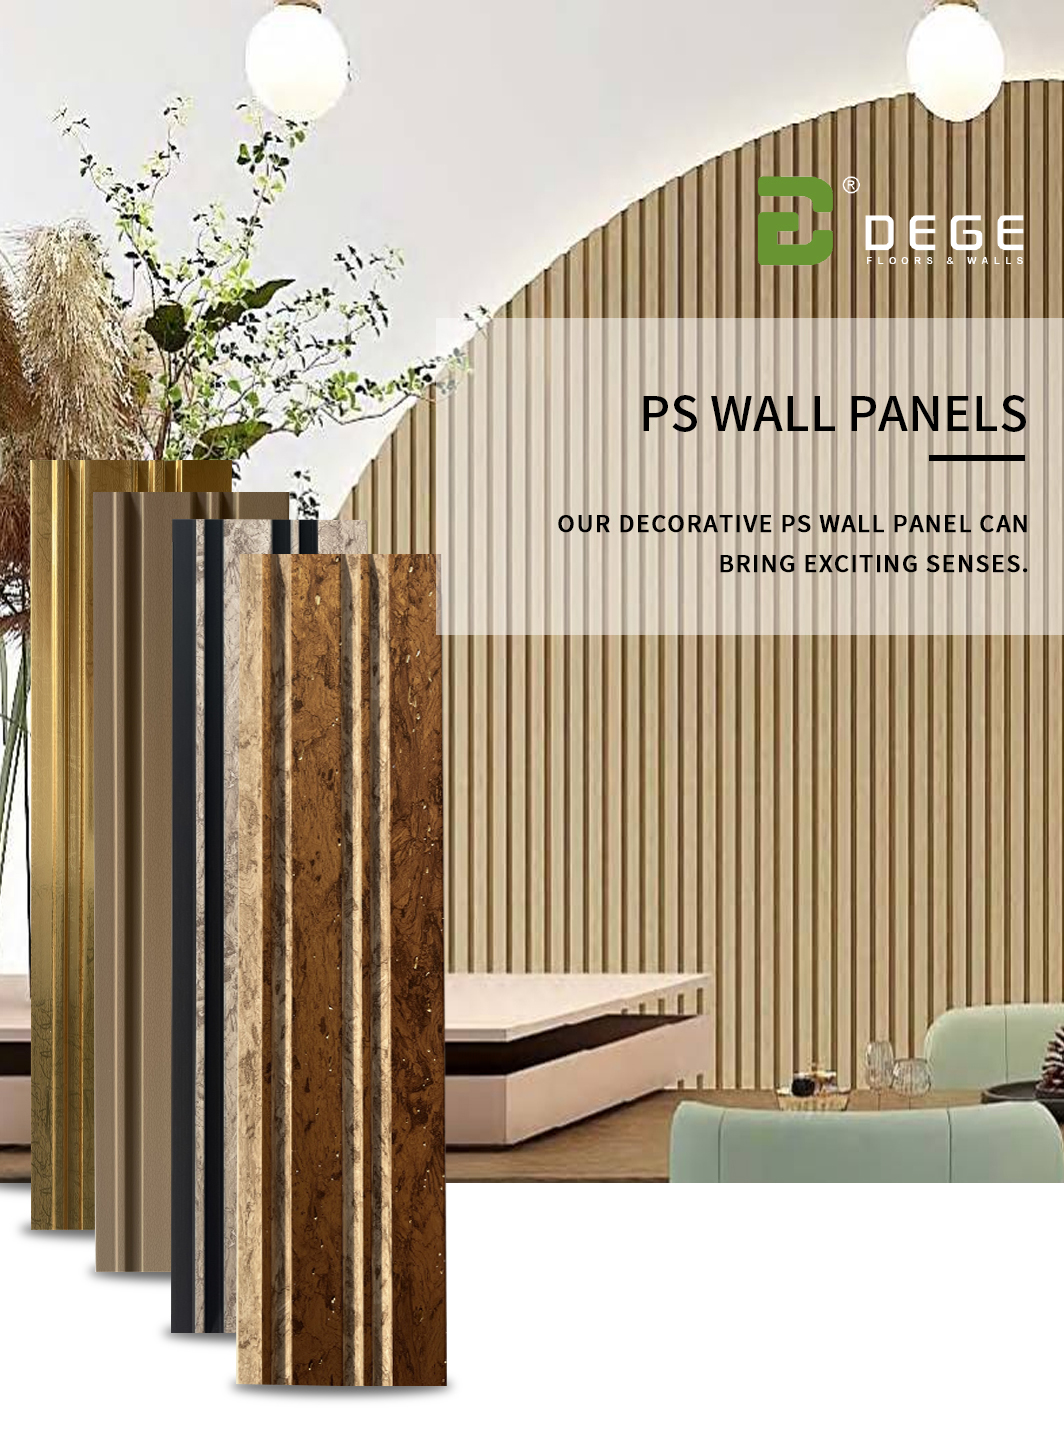 Interior Decorative PS Wall Panels Installation (1)